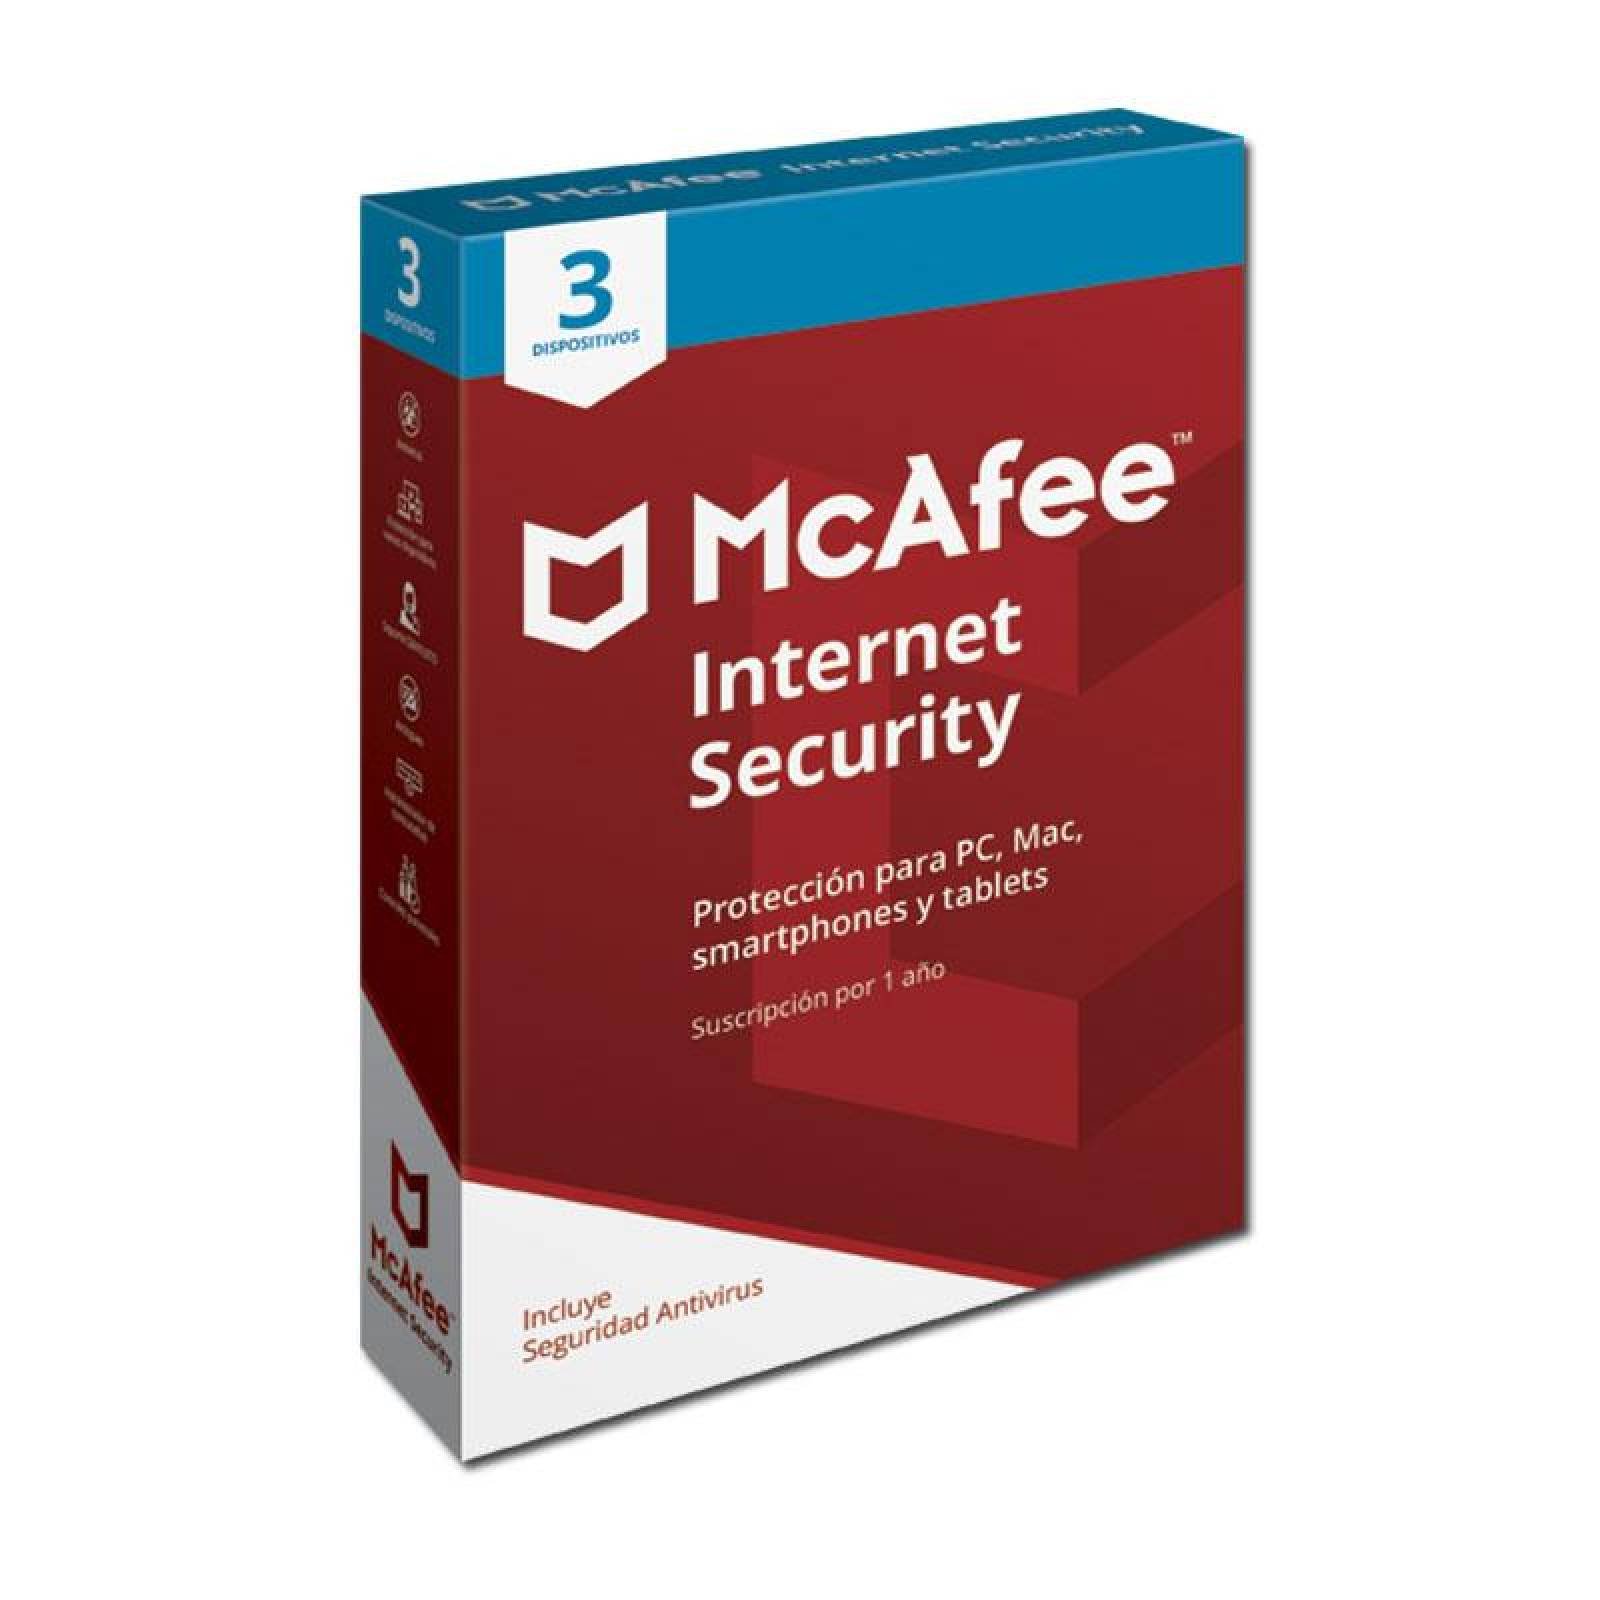 Internet Security McAfee 3 dispositivos